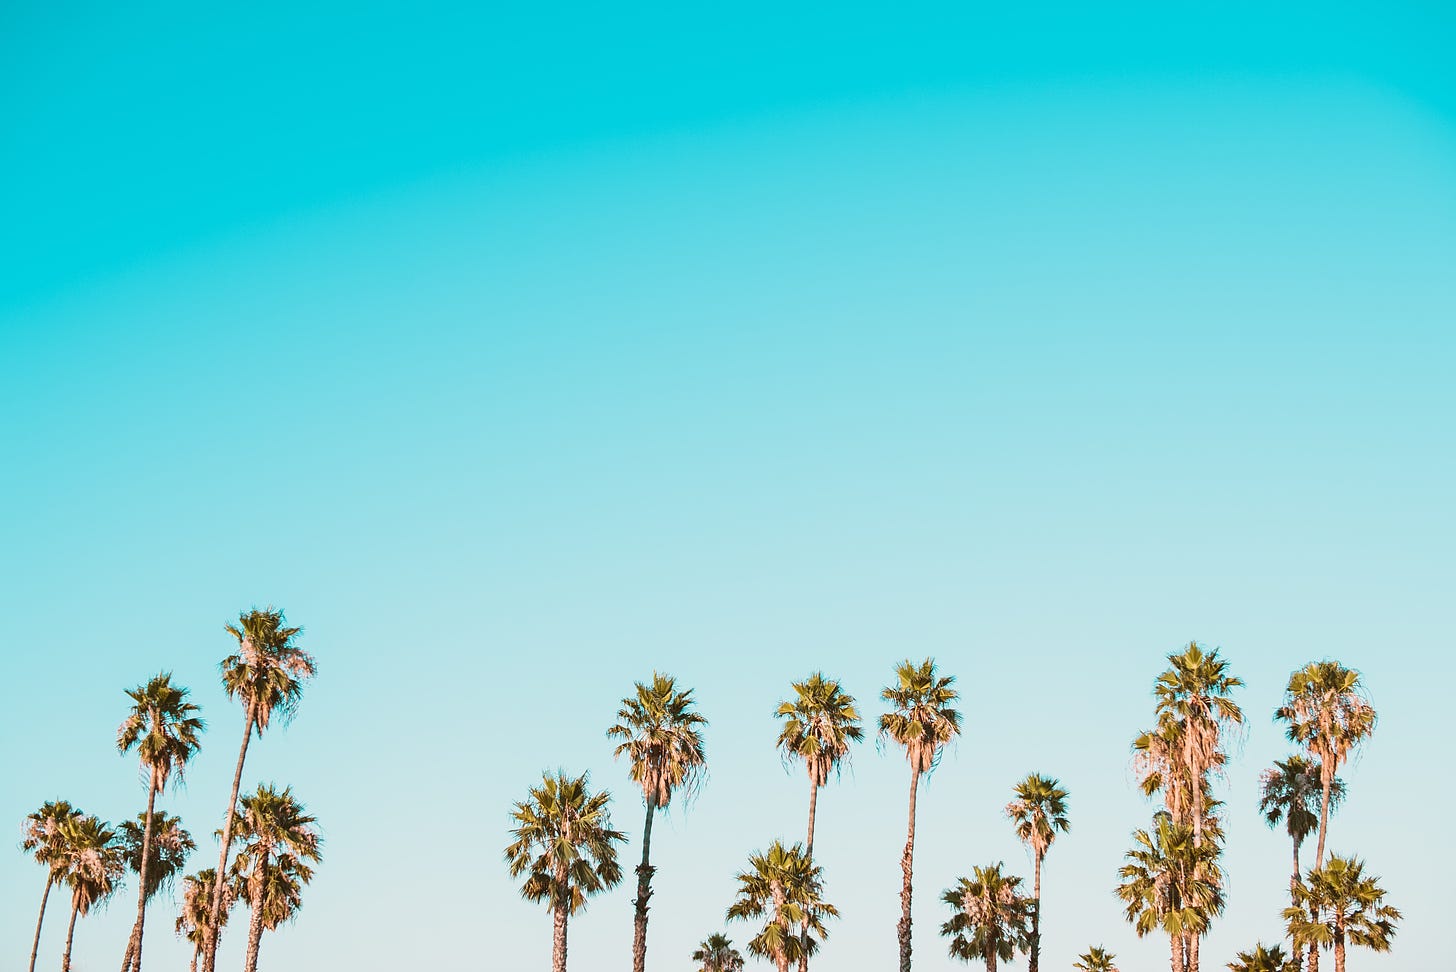 Palm trees under a blue sky by Corey Agopian on Unsplash.